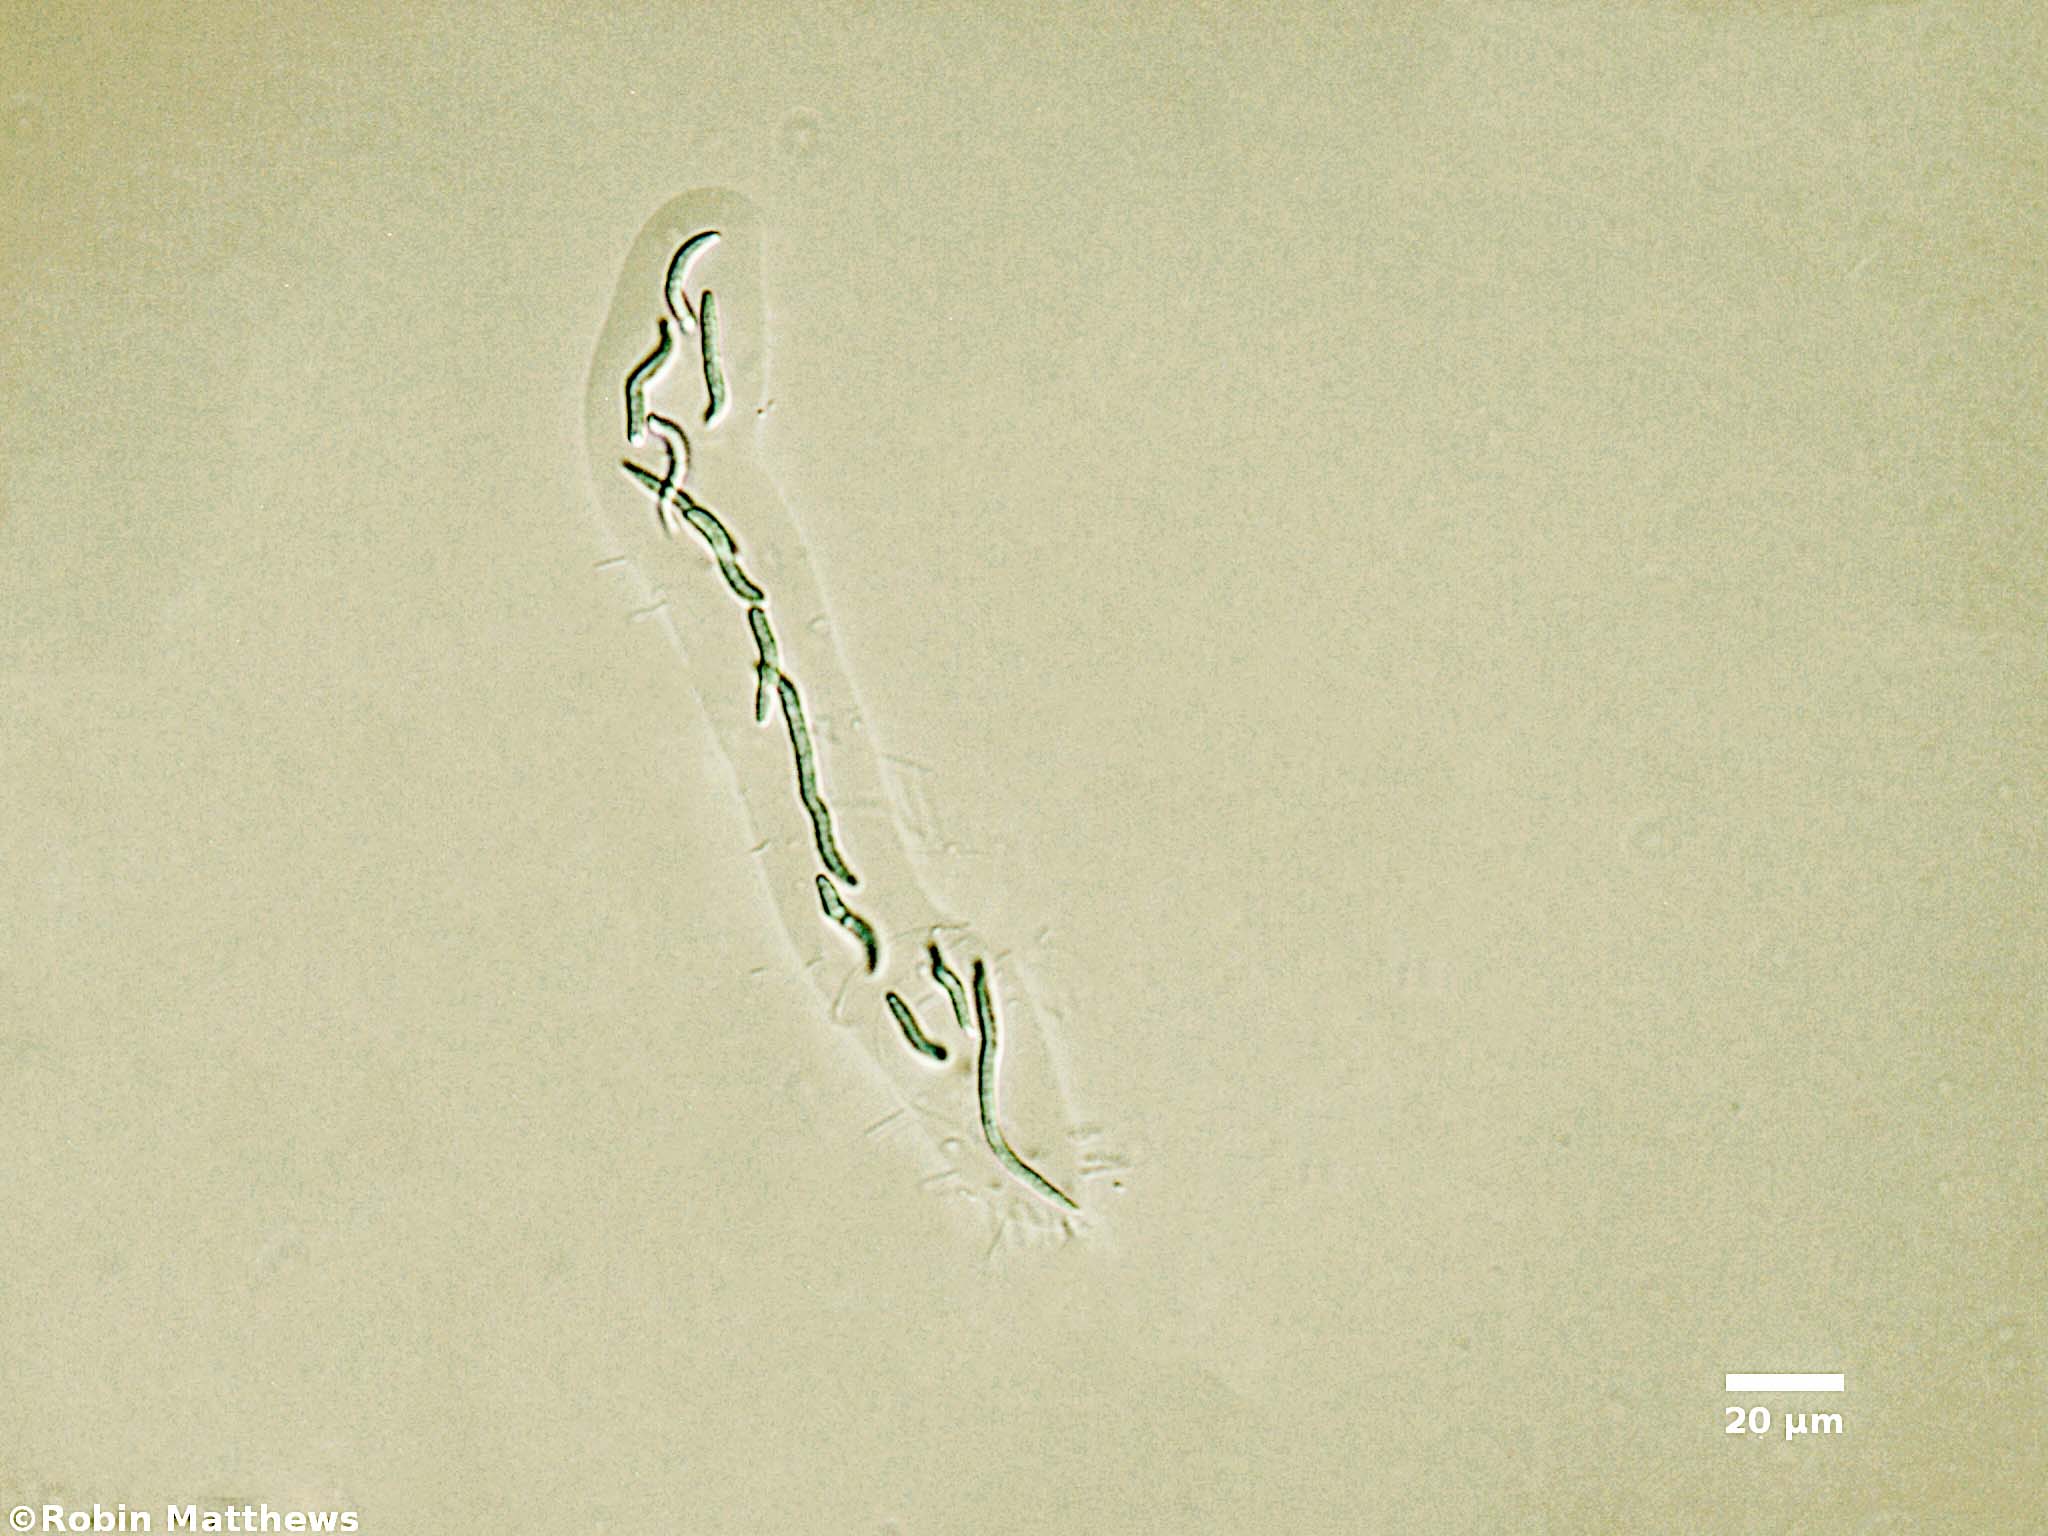 Cyanobacteria/Synechococcales/Synechococcaceae/Rhabdoderma/lineare/rhabdoderma-lineare-69.jpg